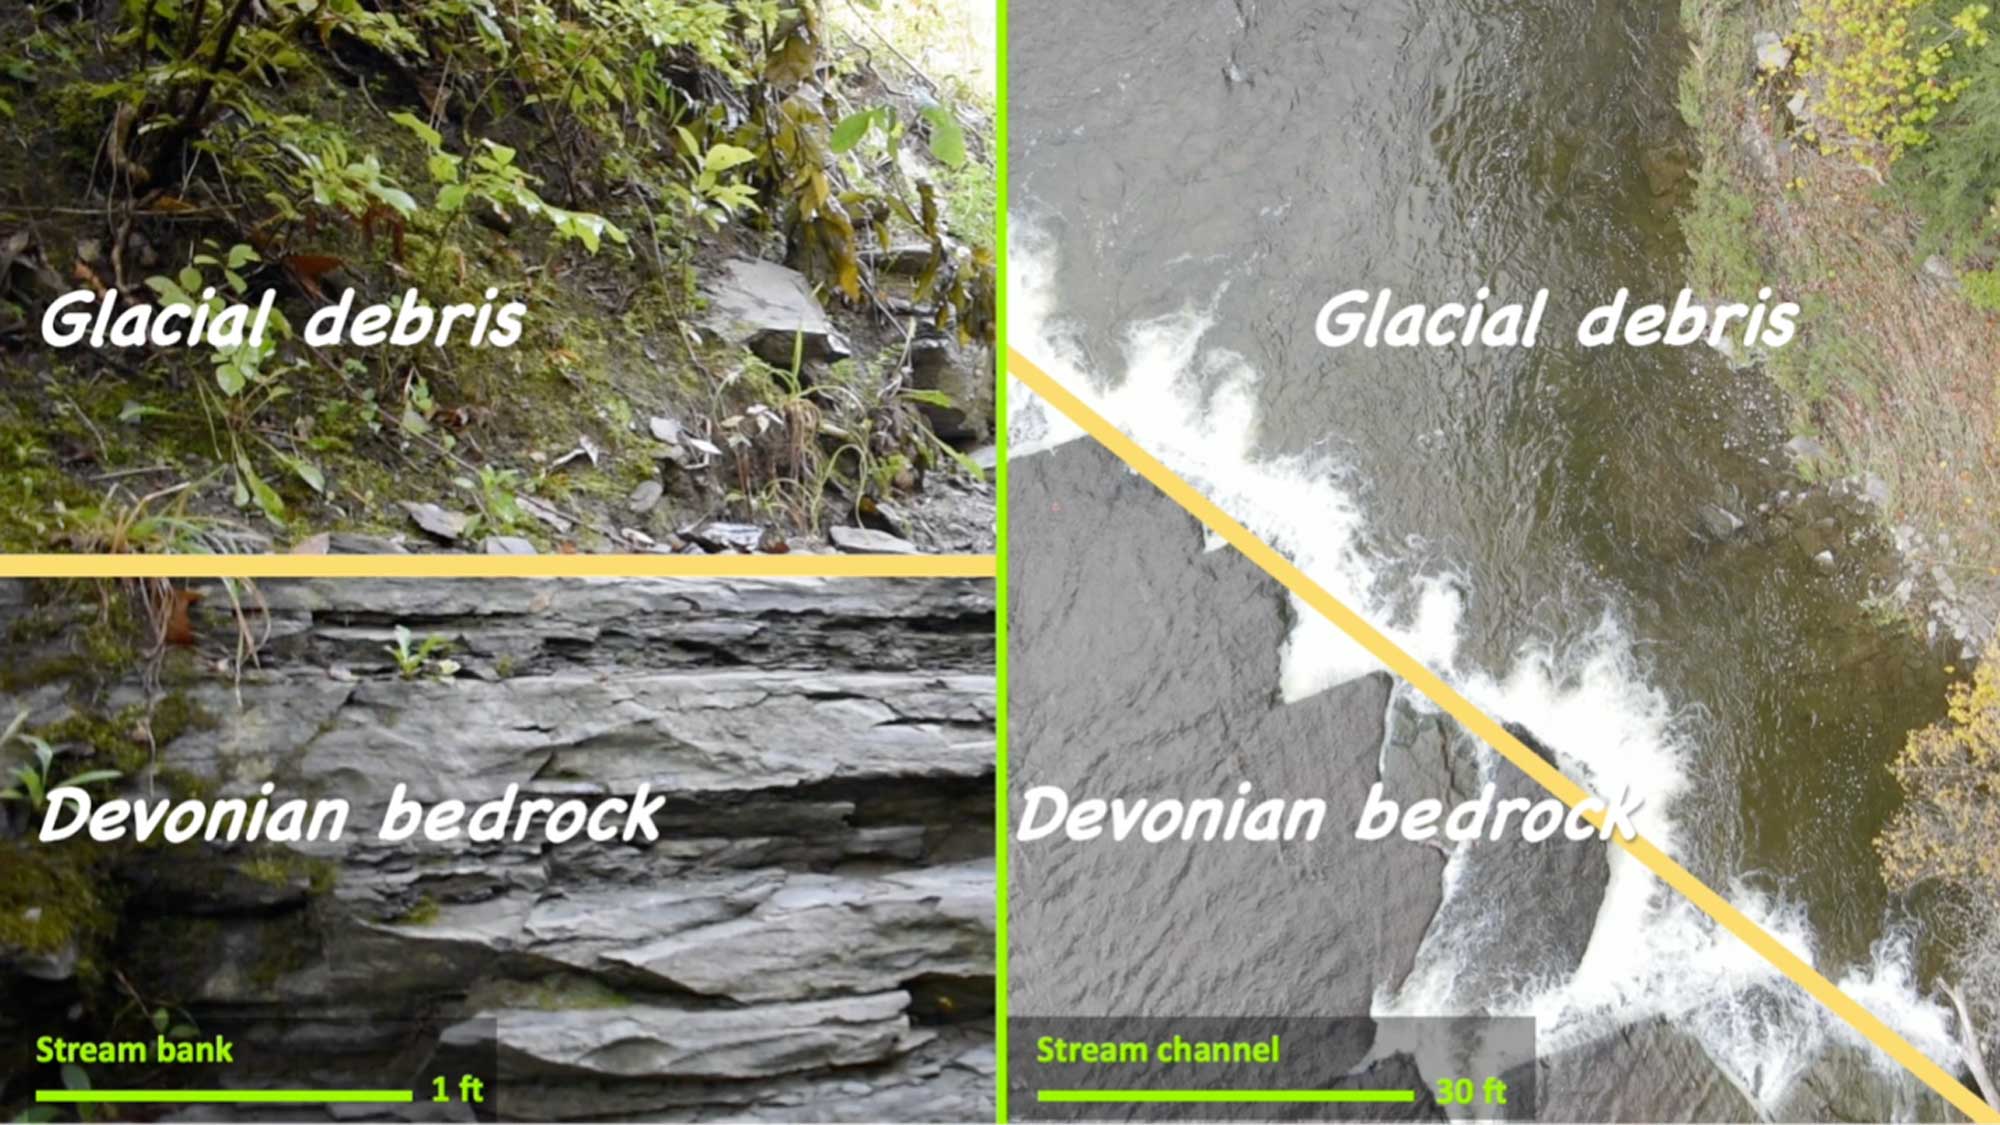 Two photographs showing glacial deposits adjacent to Devonian bedrock.